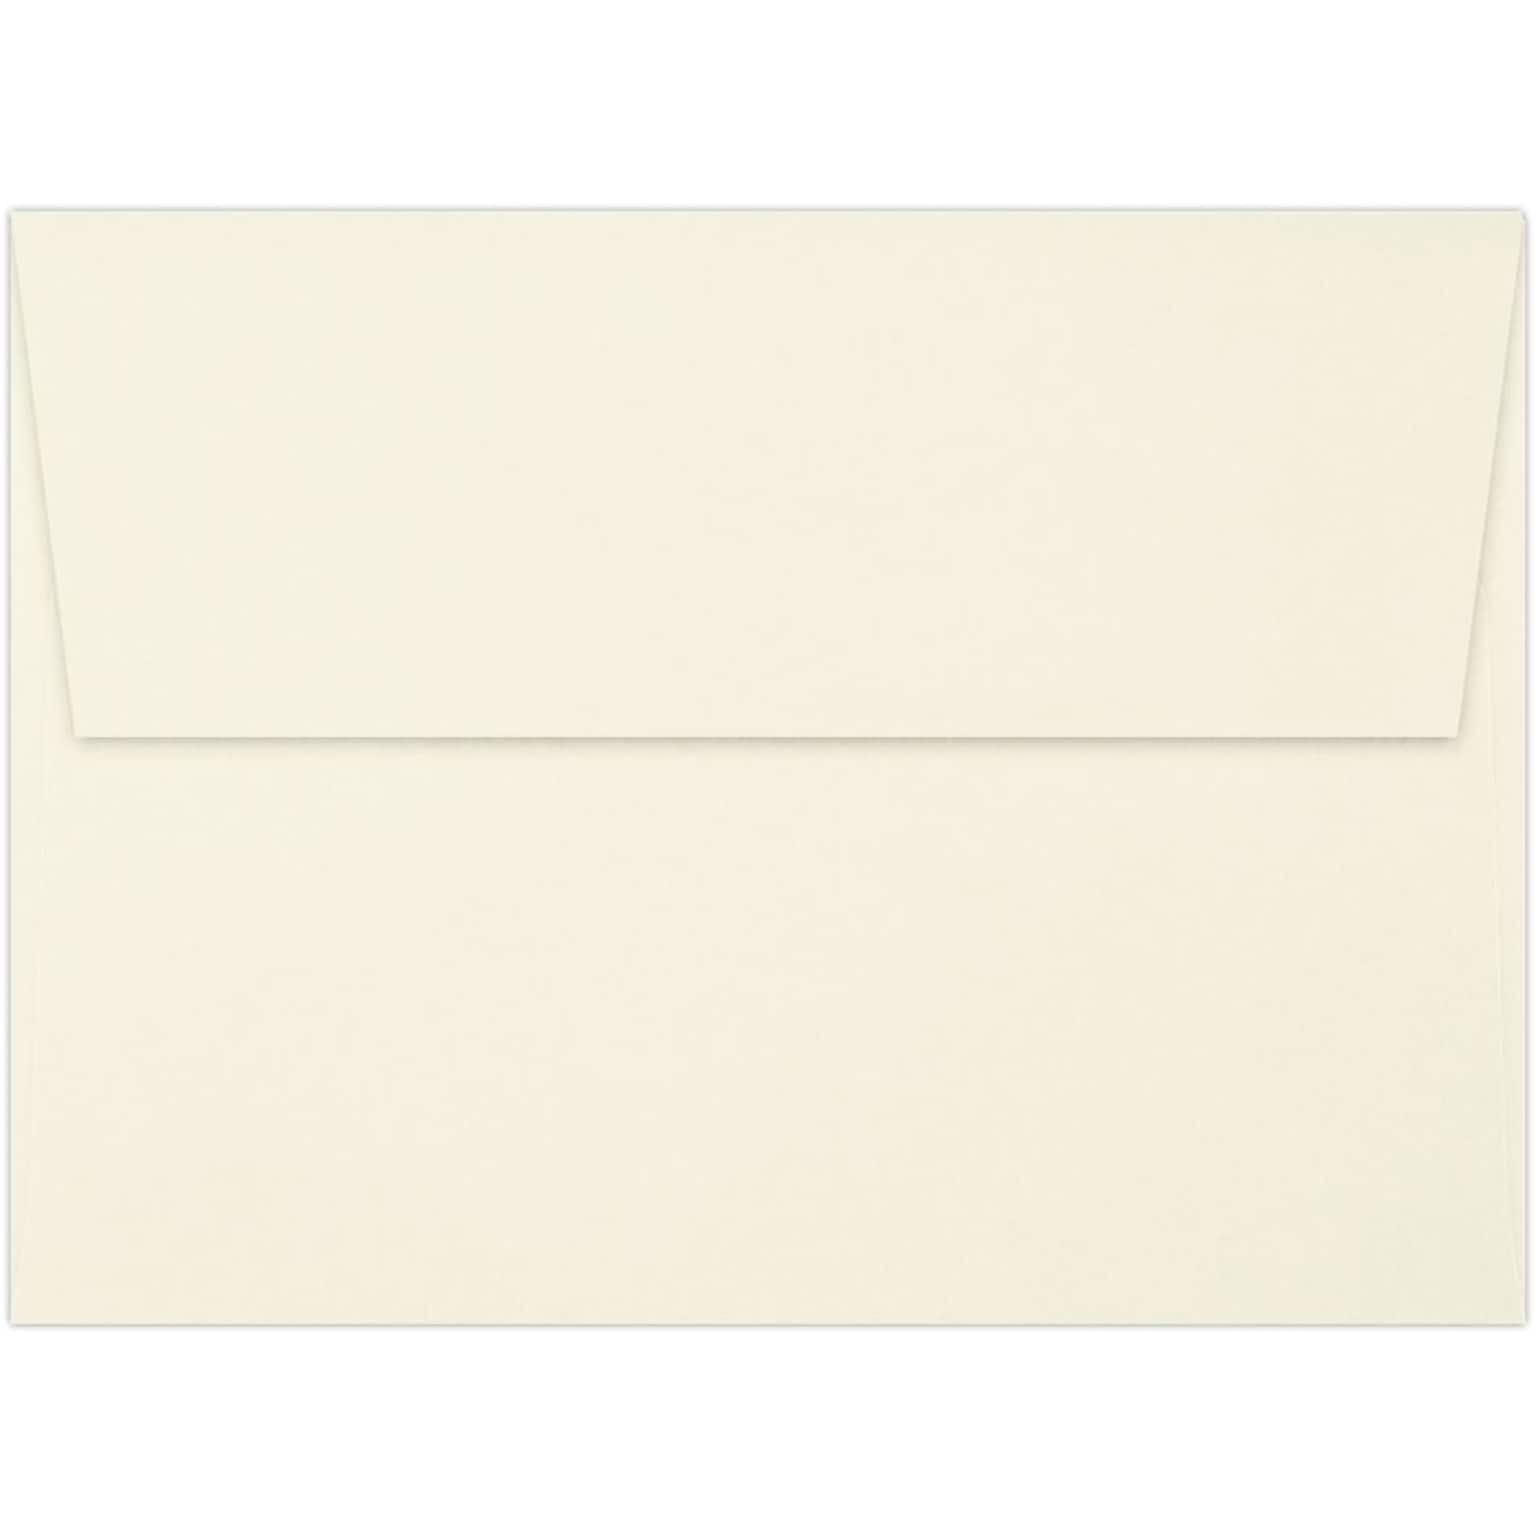 LUX A7 Invitation Envelopes (5 1/4 x 7 1/4) 500/Pack, 70lb. Classic Linen® Natural White (4880-70NWLI-500)